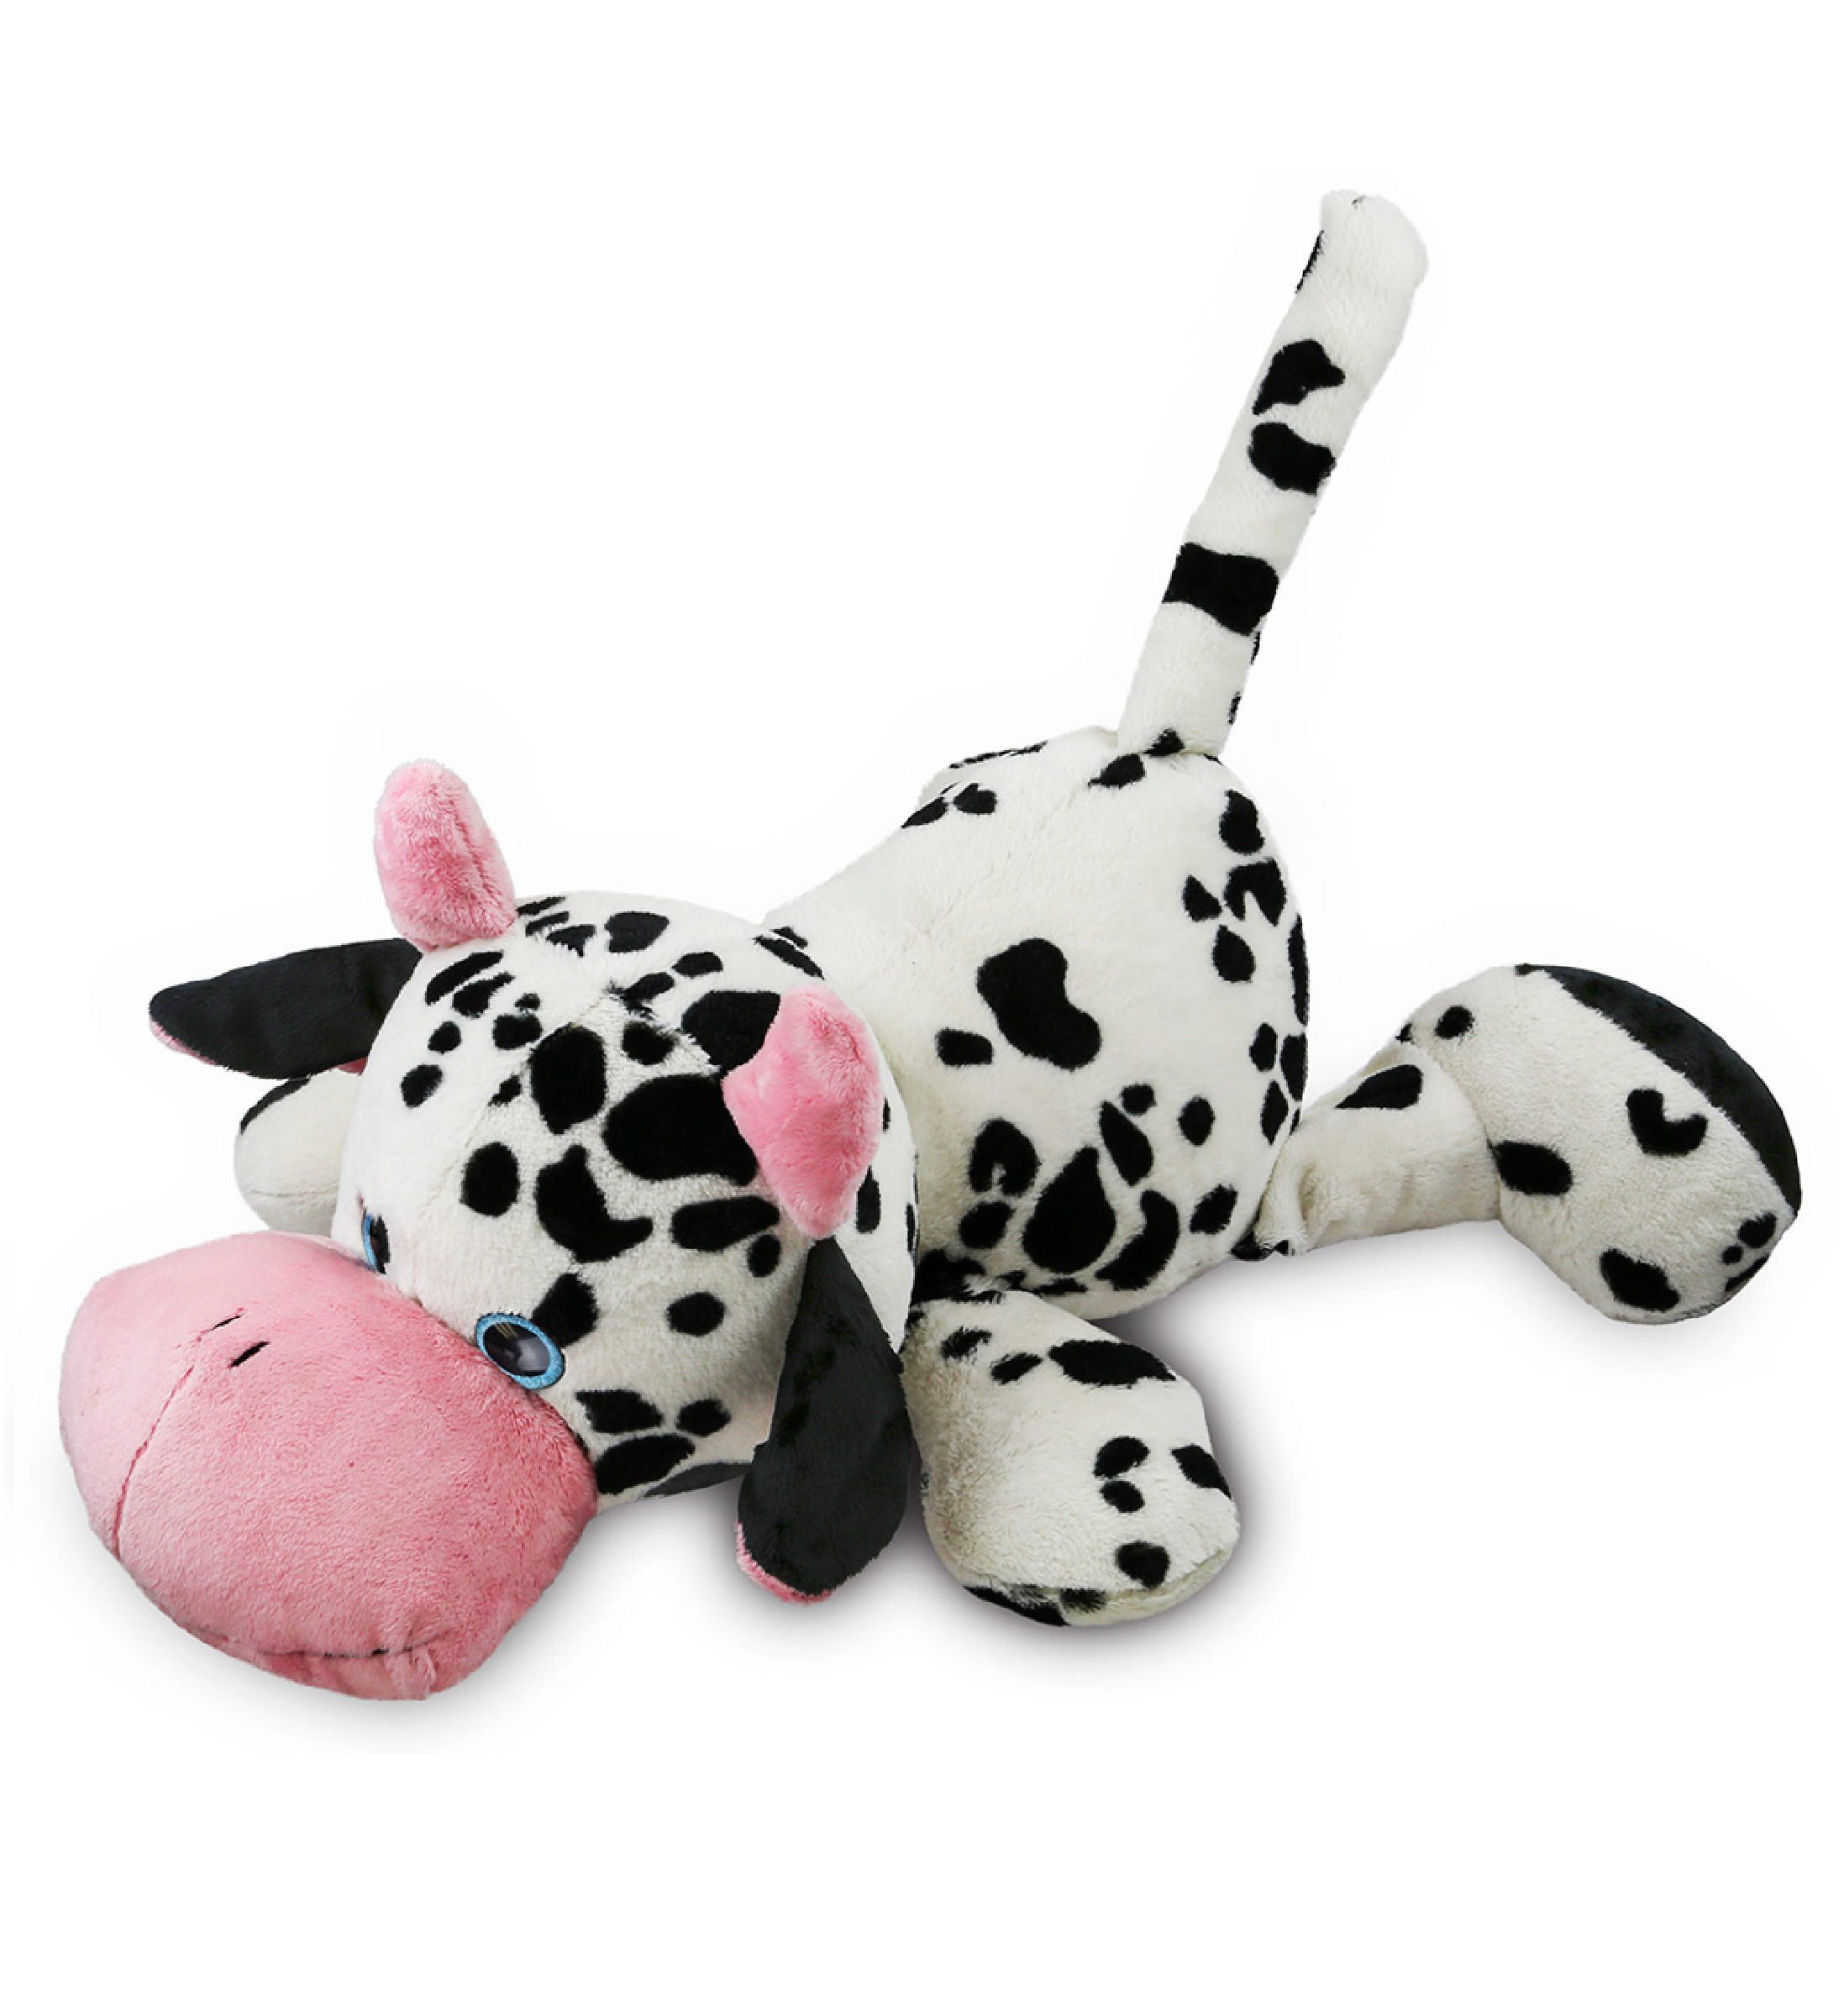 DolliBu | DolliBu Cow XL Stuffed Animal Pillow 27 Inch, Soft Moo Cow